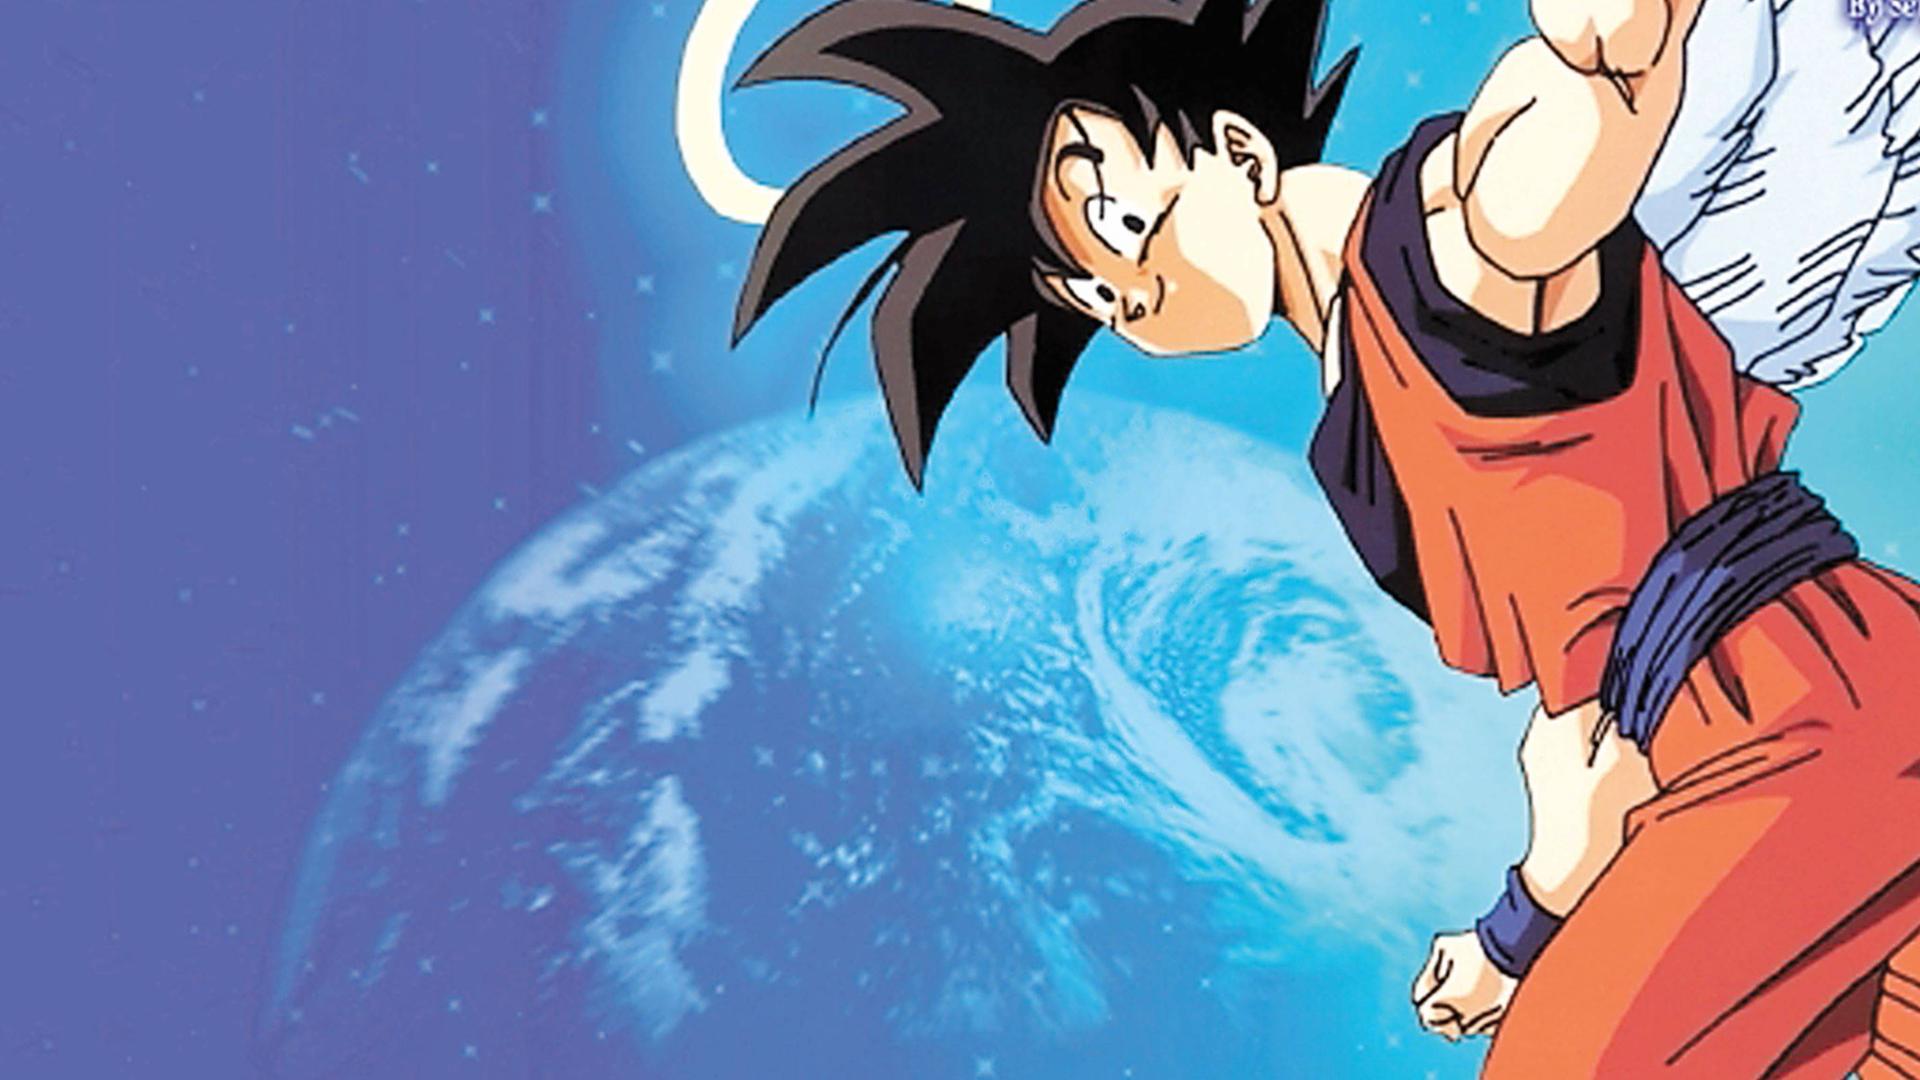 Der Mangaheld Son Goku aus Dragon Ball von Akira Toriyama.